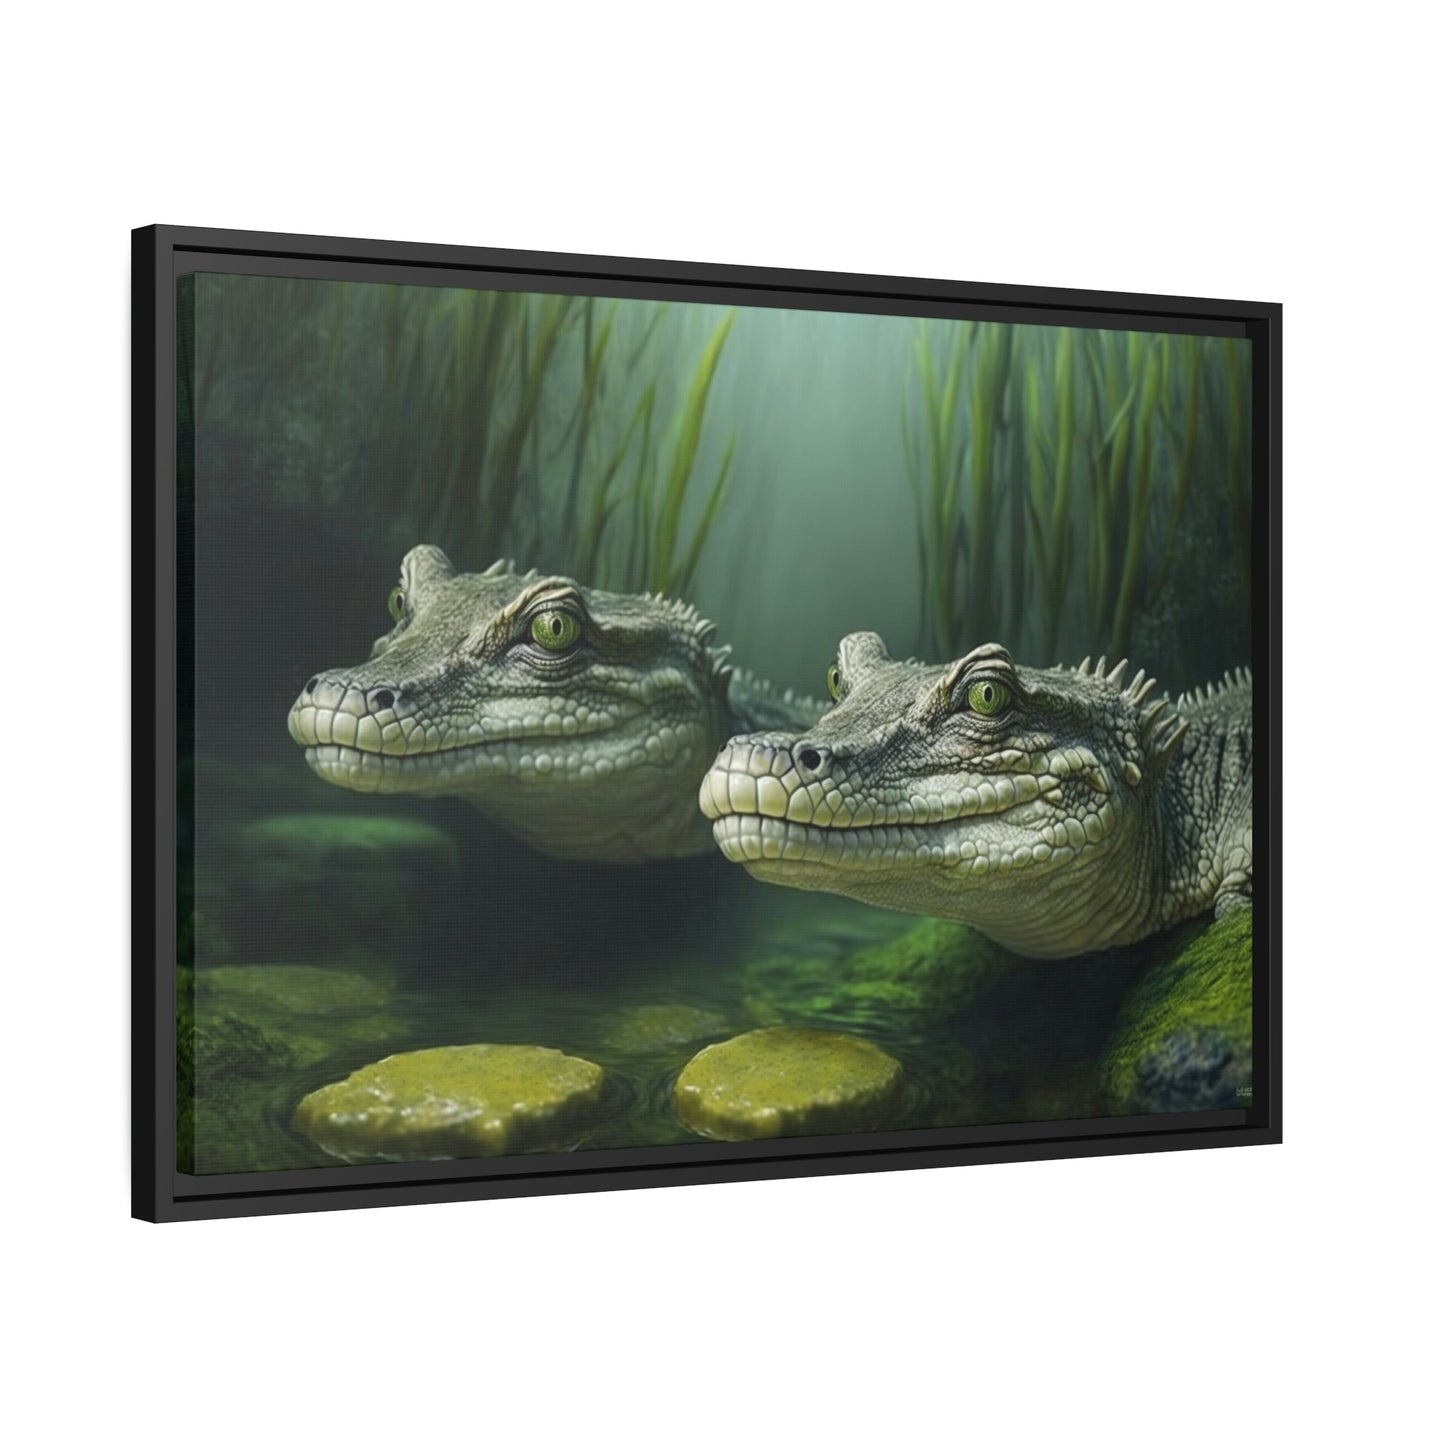 Swamp King: A Natural Canvas & Poster Wall Art of a Dominant Alligators